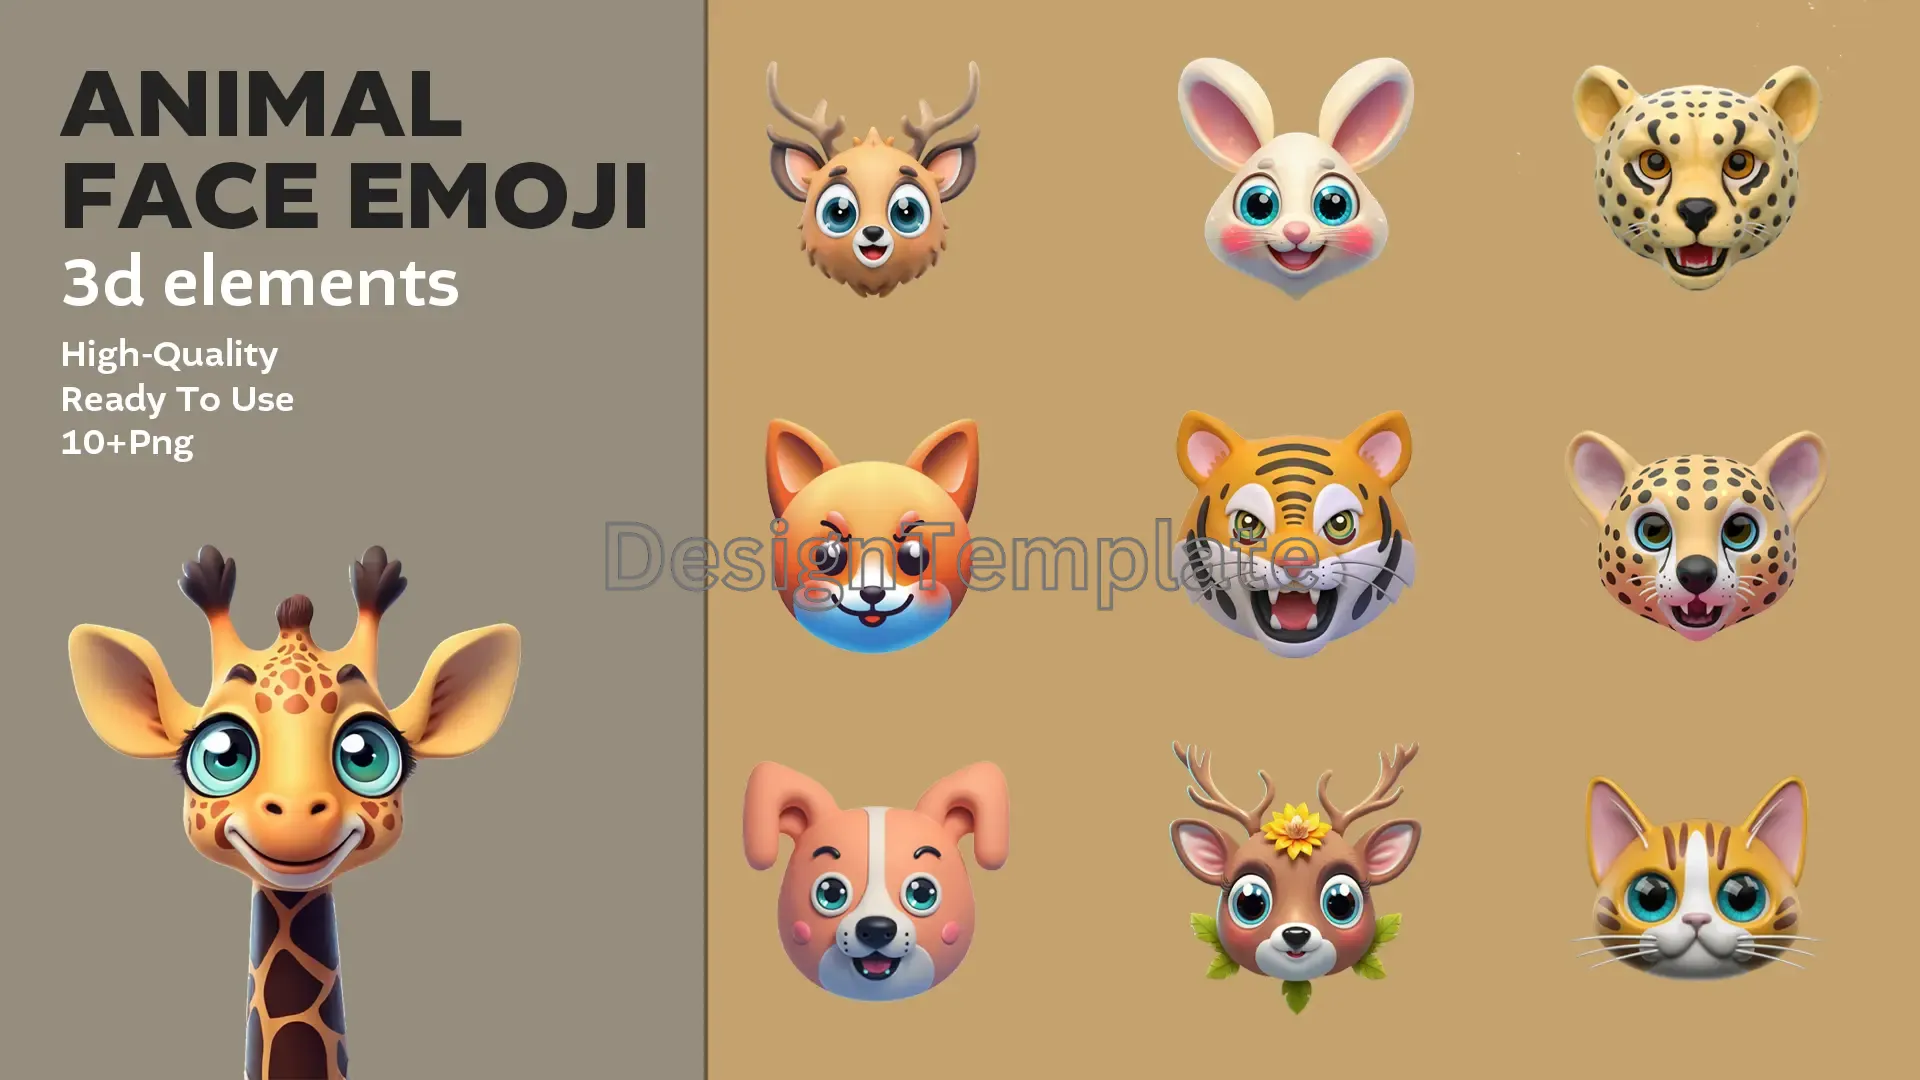 Beastly Smiles Vibrant 3D Animal Emoji Graphics Pack